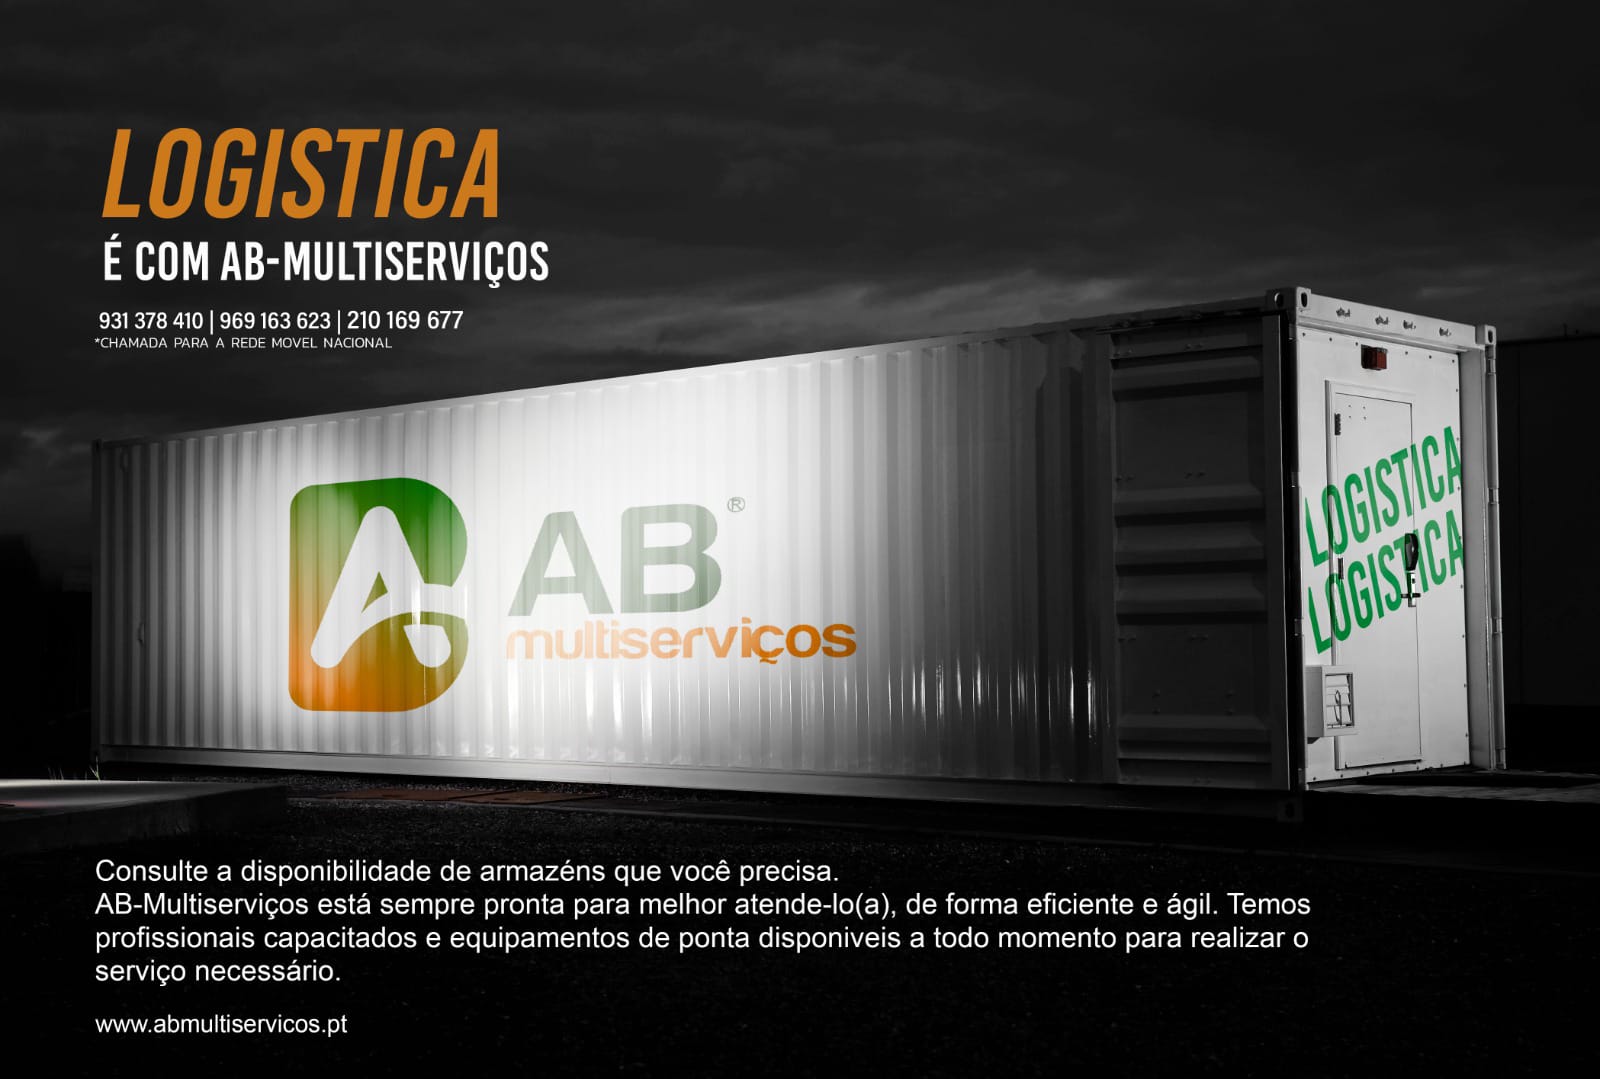 abmultiservicos-portugal-www.abmultiservicos.pt-AntonioBaptista-351 931 378 410 -imagemcomdireitosreservados-011